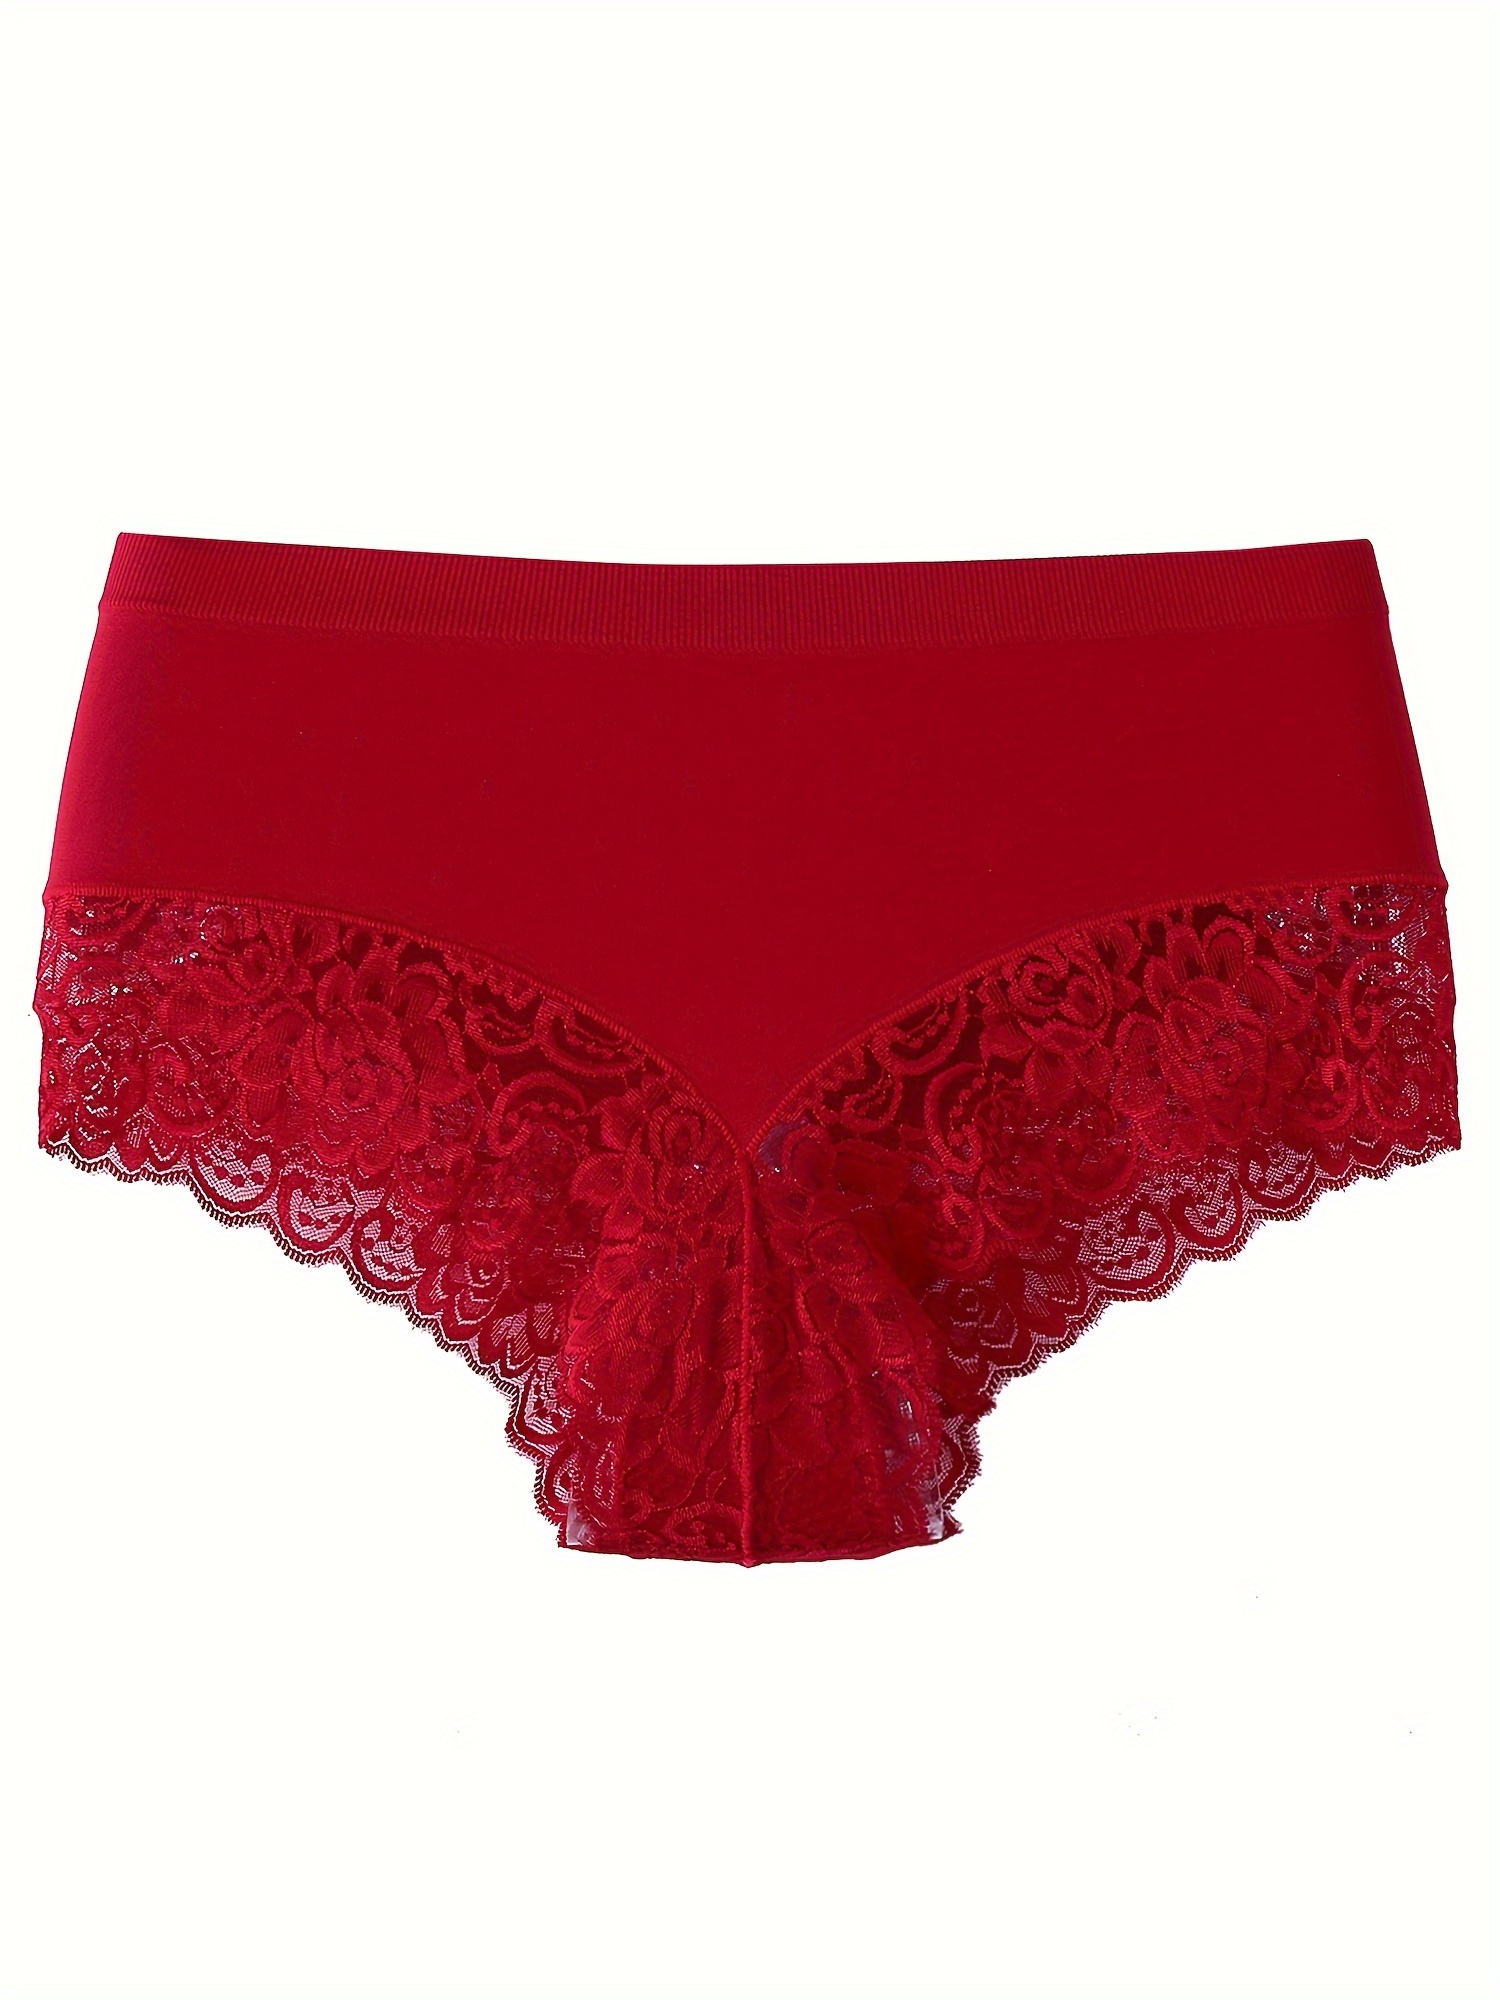 5pcs/set 2xl-3xl Women's Underwear, Sexy Lace Panties, Large Size, Fashion  Solid Color, High Waist Seamless Panties, Lingerie